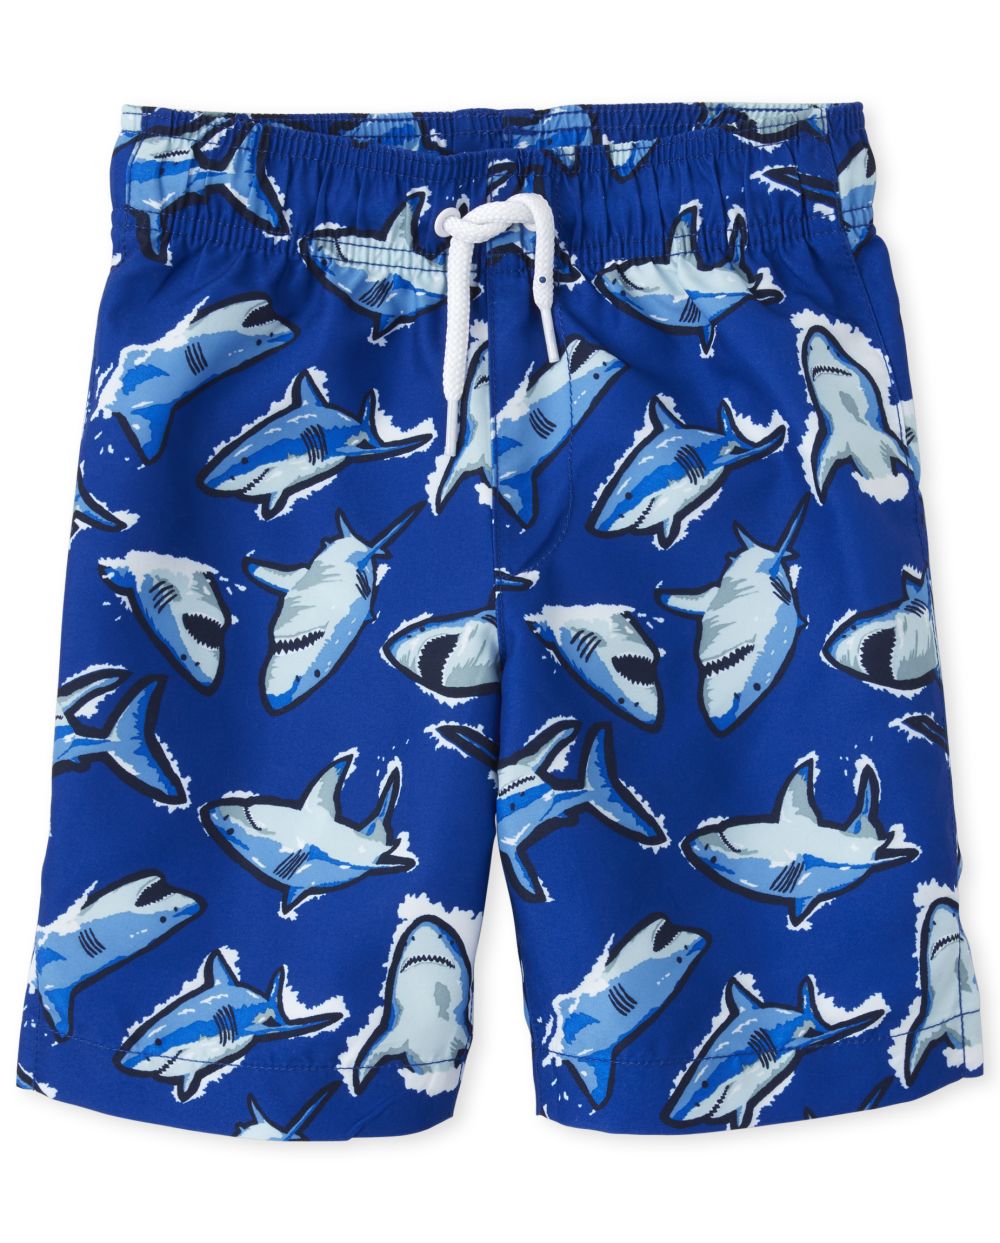 Boys Shark Print Swim Trunks